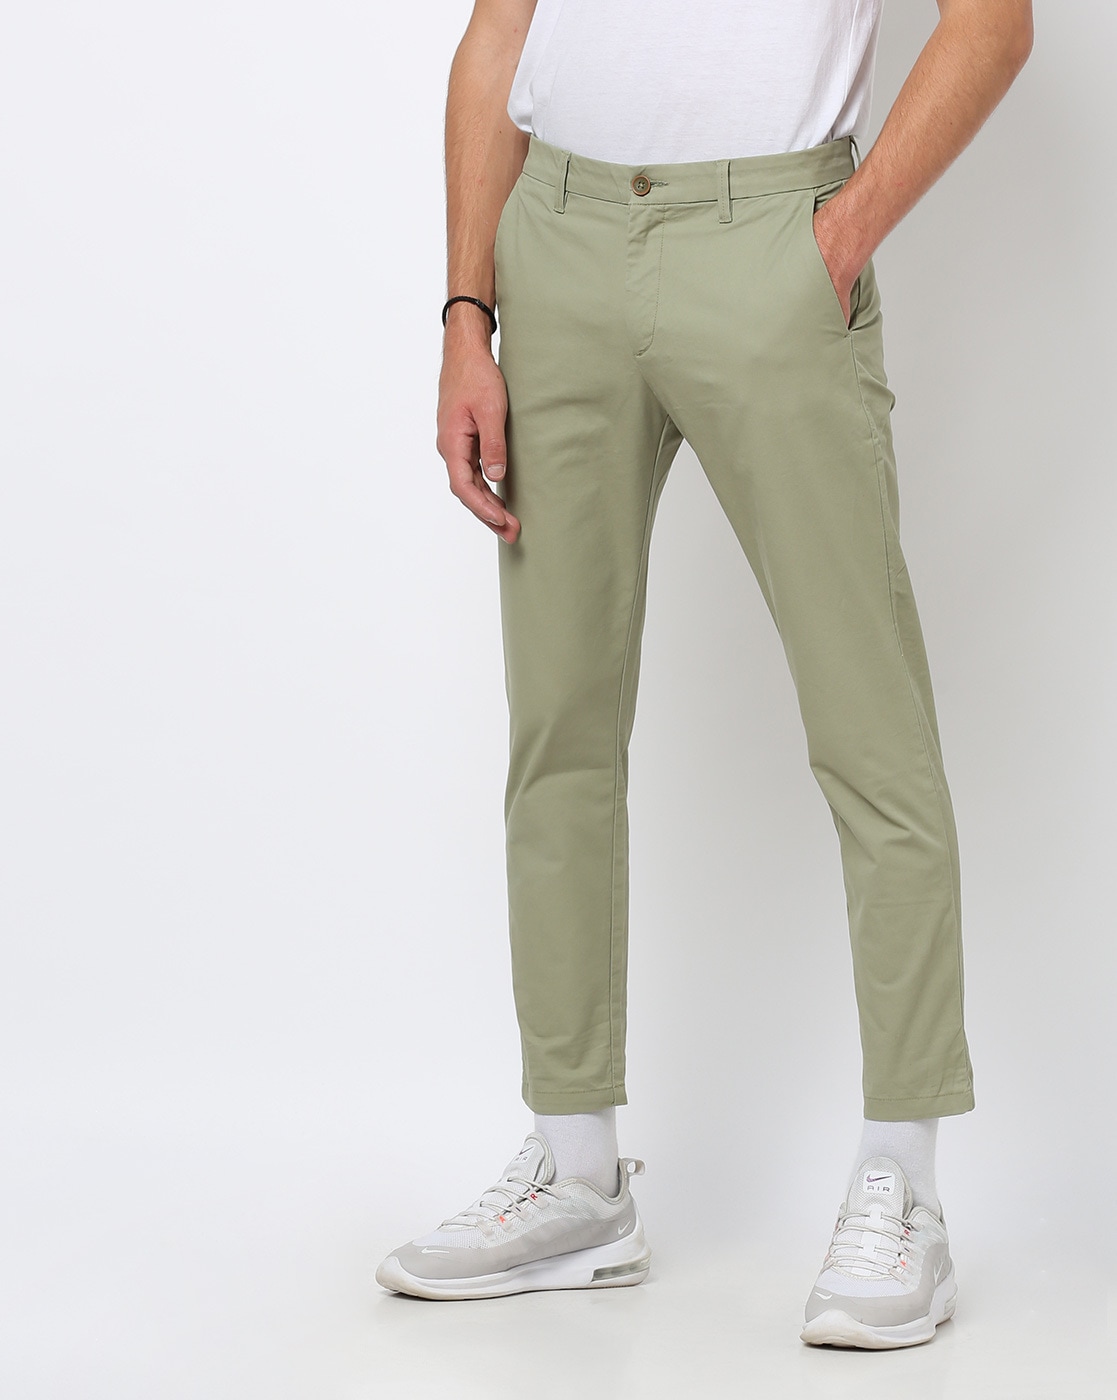 Buy Olive Green Trousers  Pants for Men by Arrow Sports Online  Ajiocom